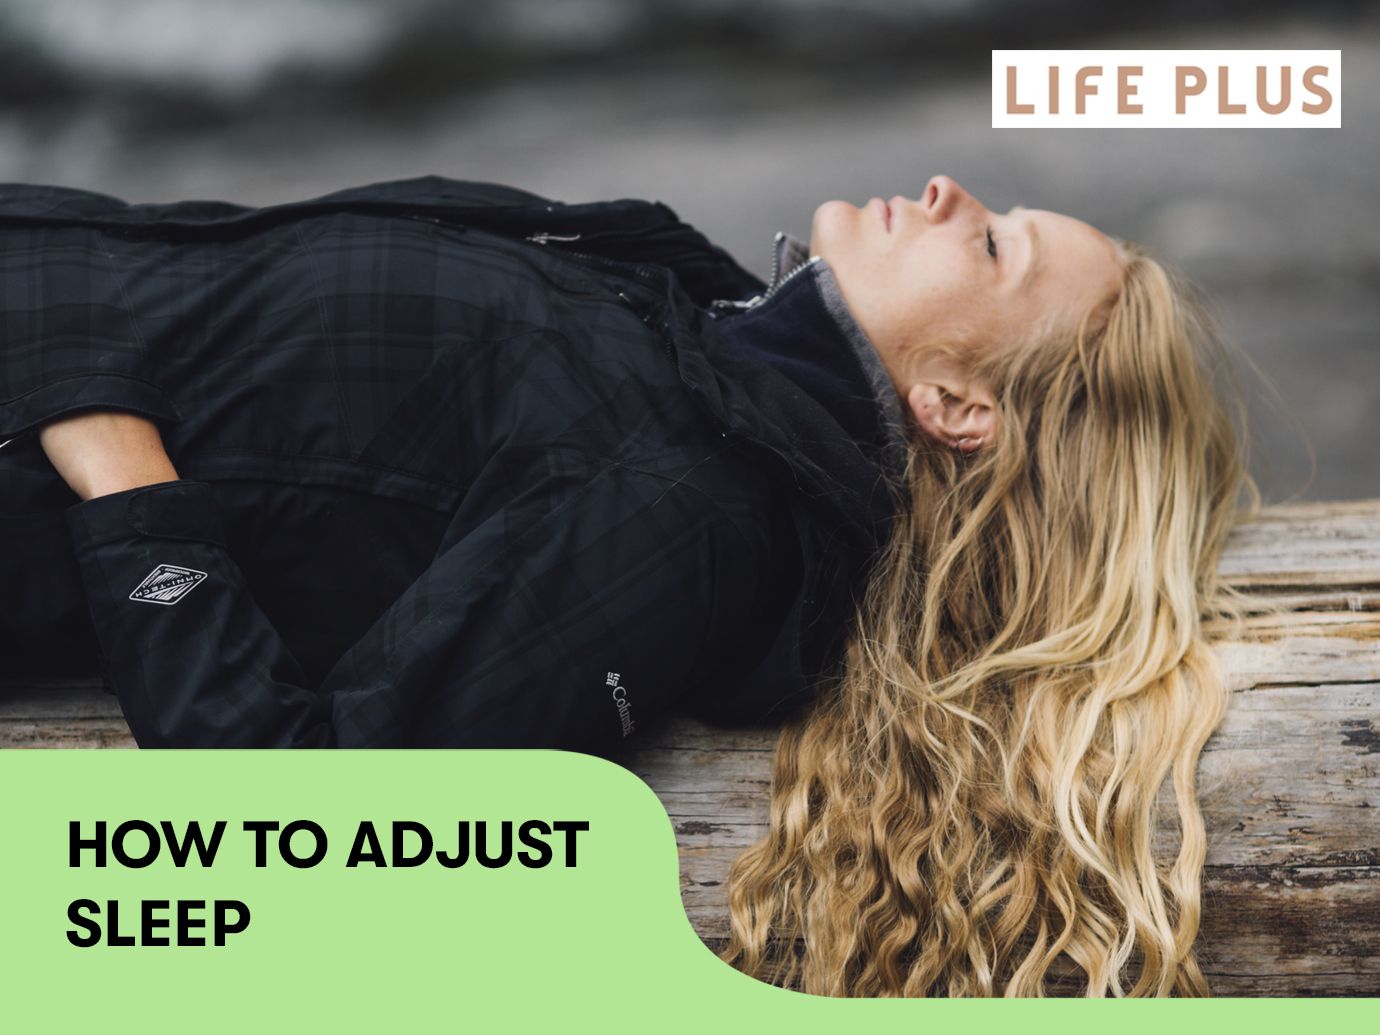 How to adjust sleep